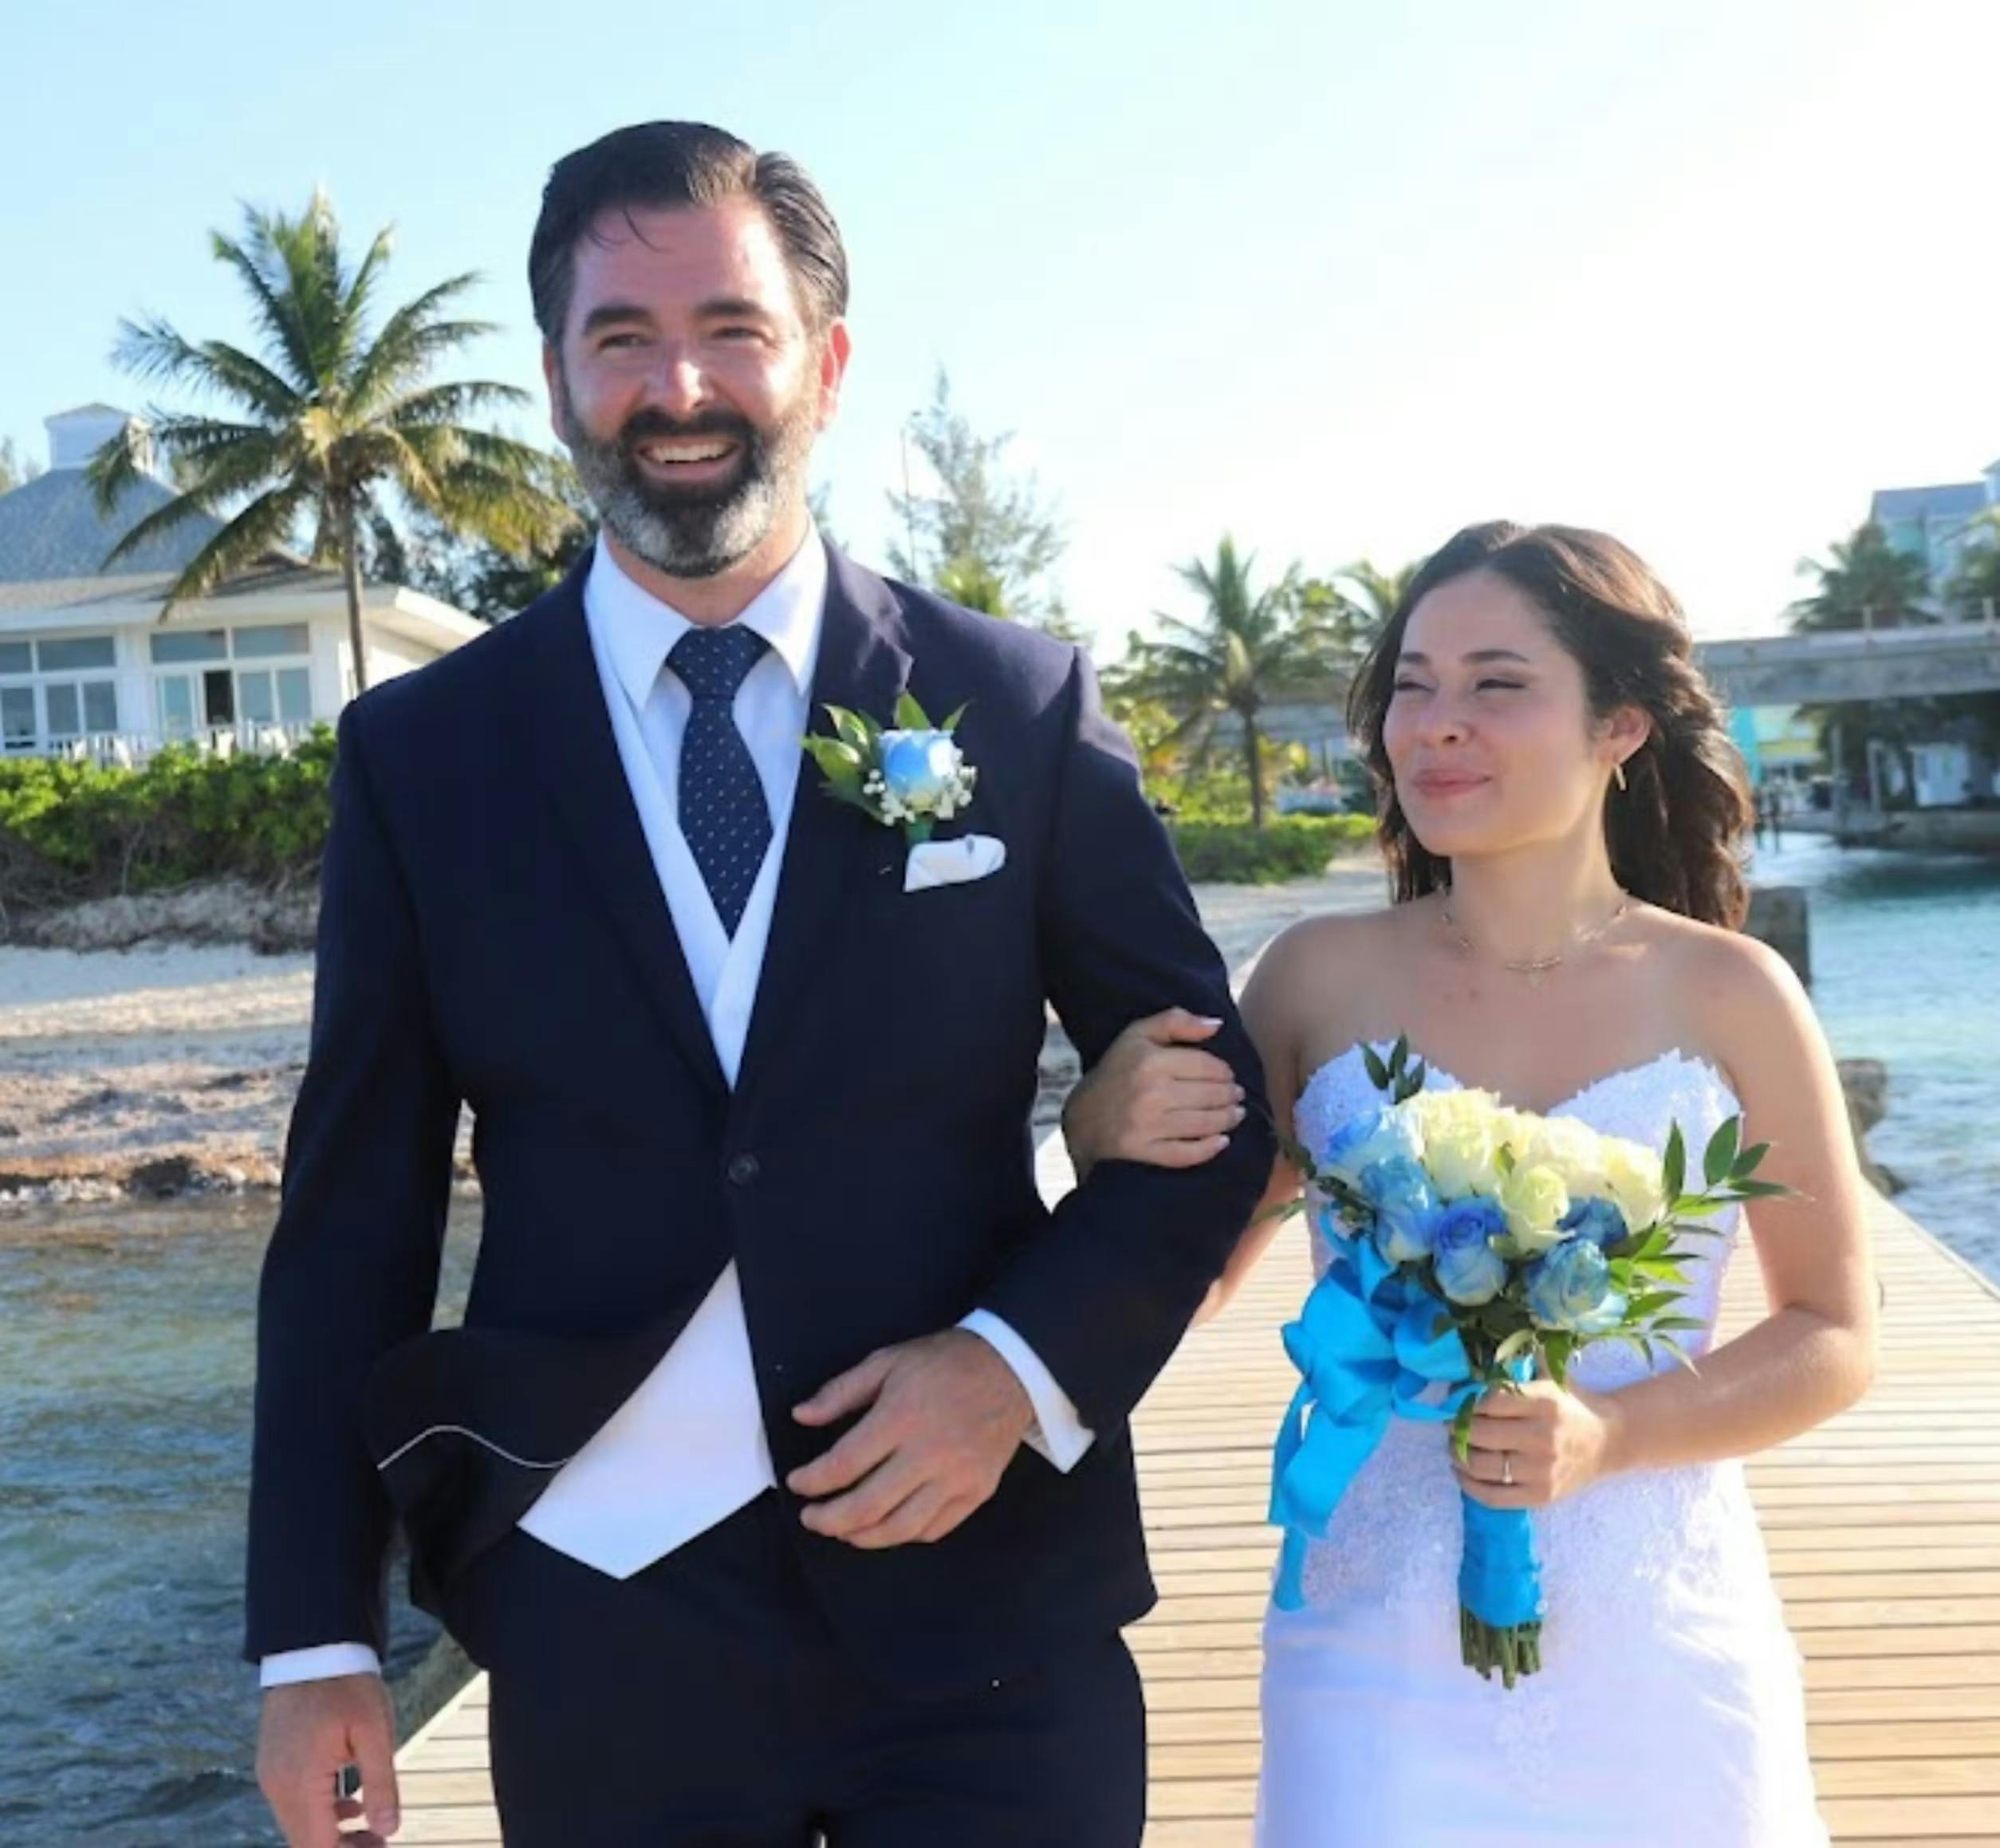 An Amazing Destination Wedding in The Bahamas